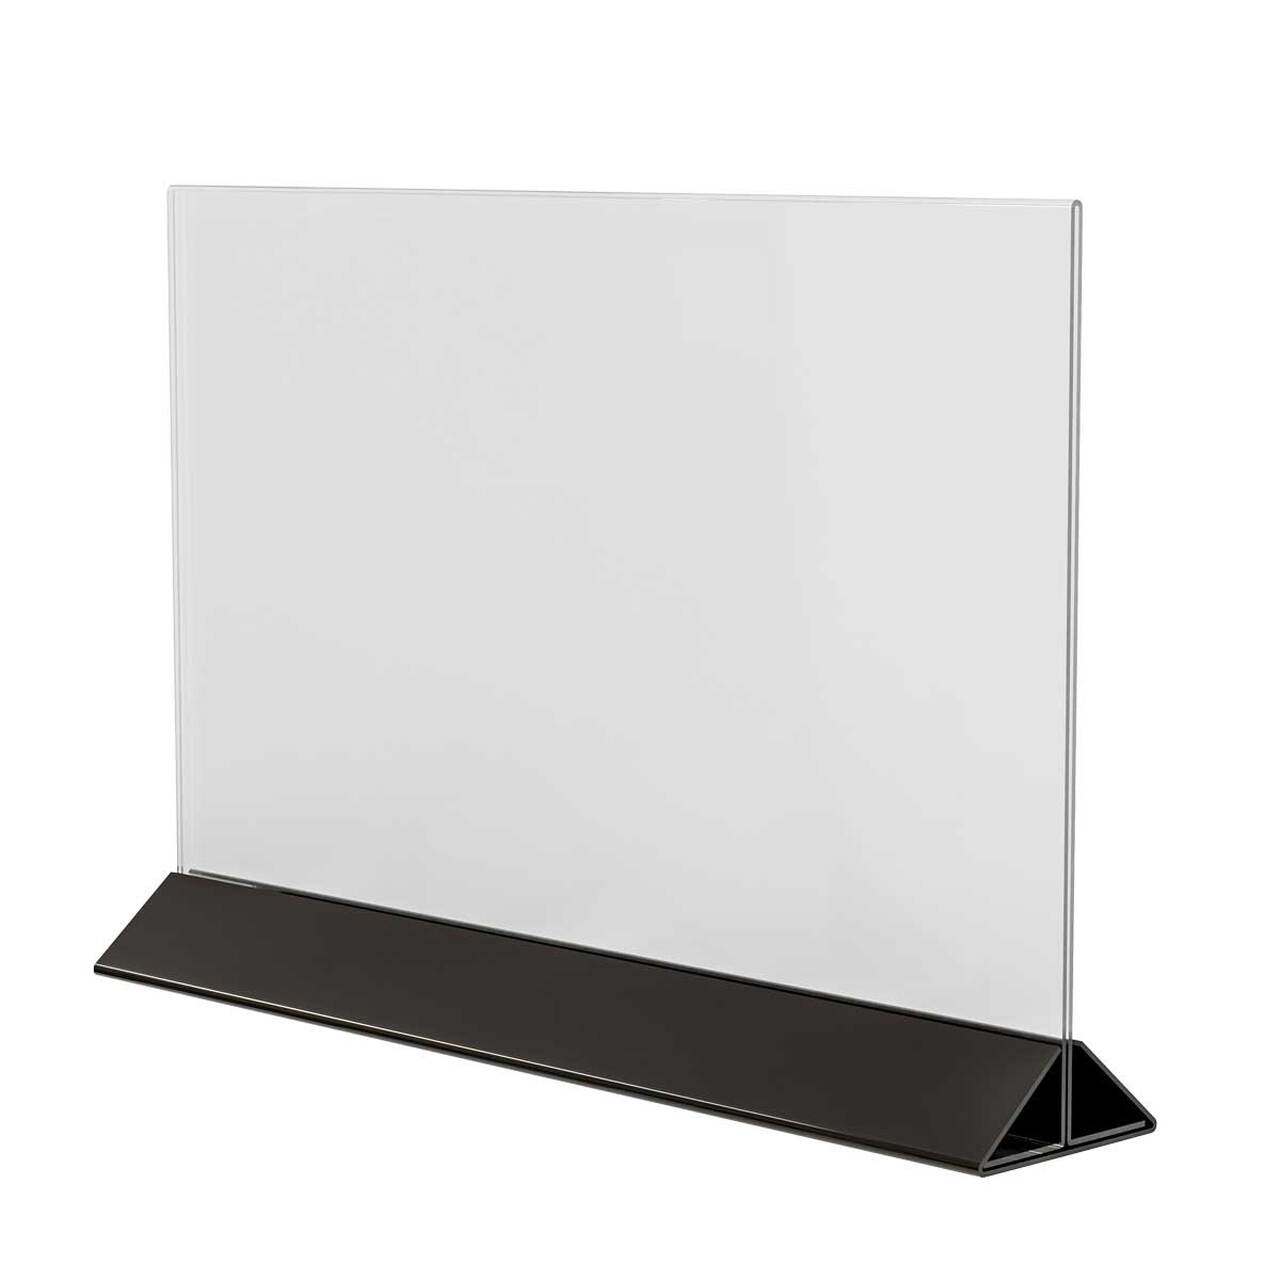 Suport meniu tip T, transparent, cu bază din plexiglas negru, format A3 (297x420mm), Landscape